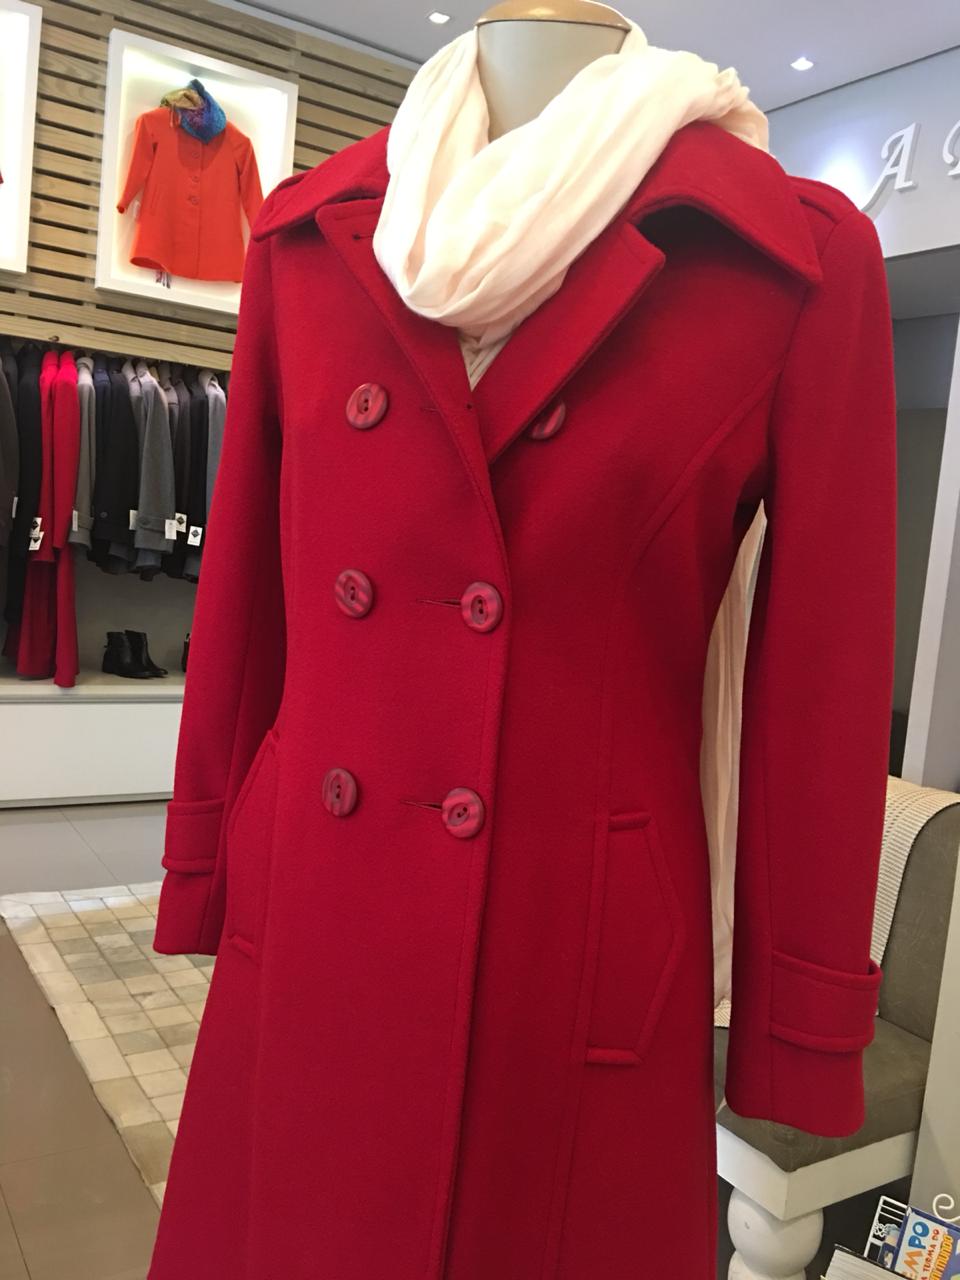 casaco de la batido vermelho